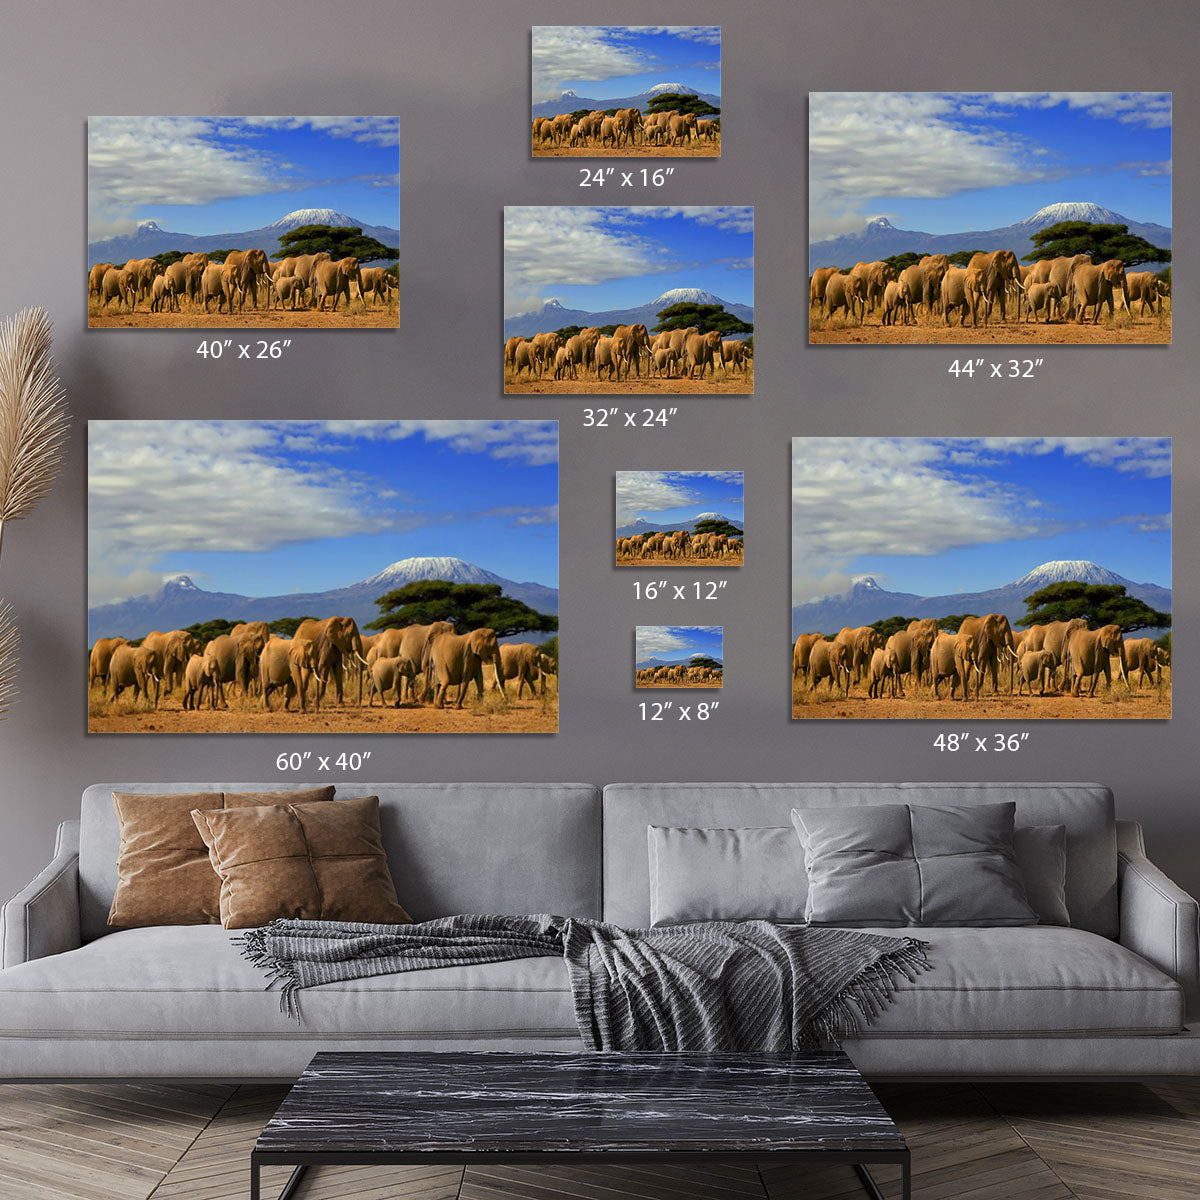 Kilimanjaro And Elephants Canvas Print or Poster - Canvas Art Rocks - 7